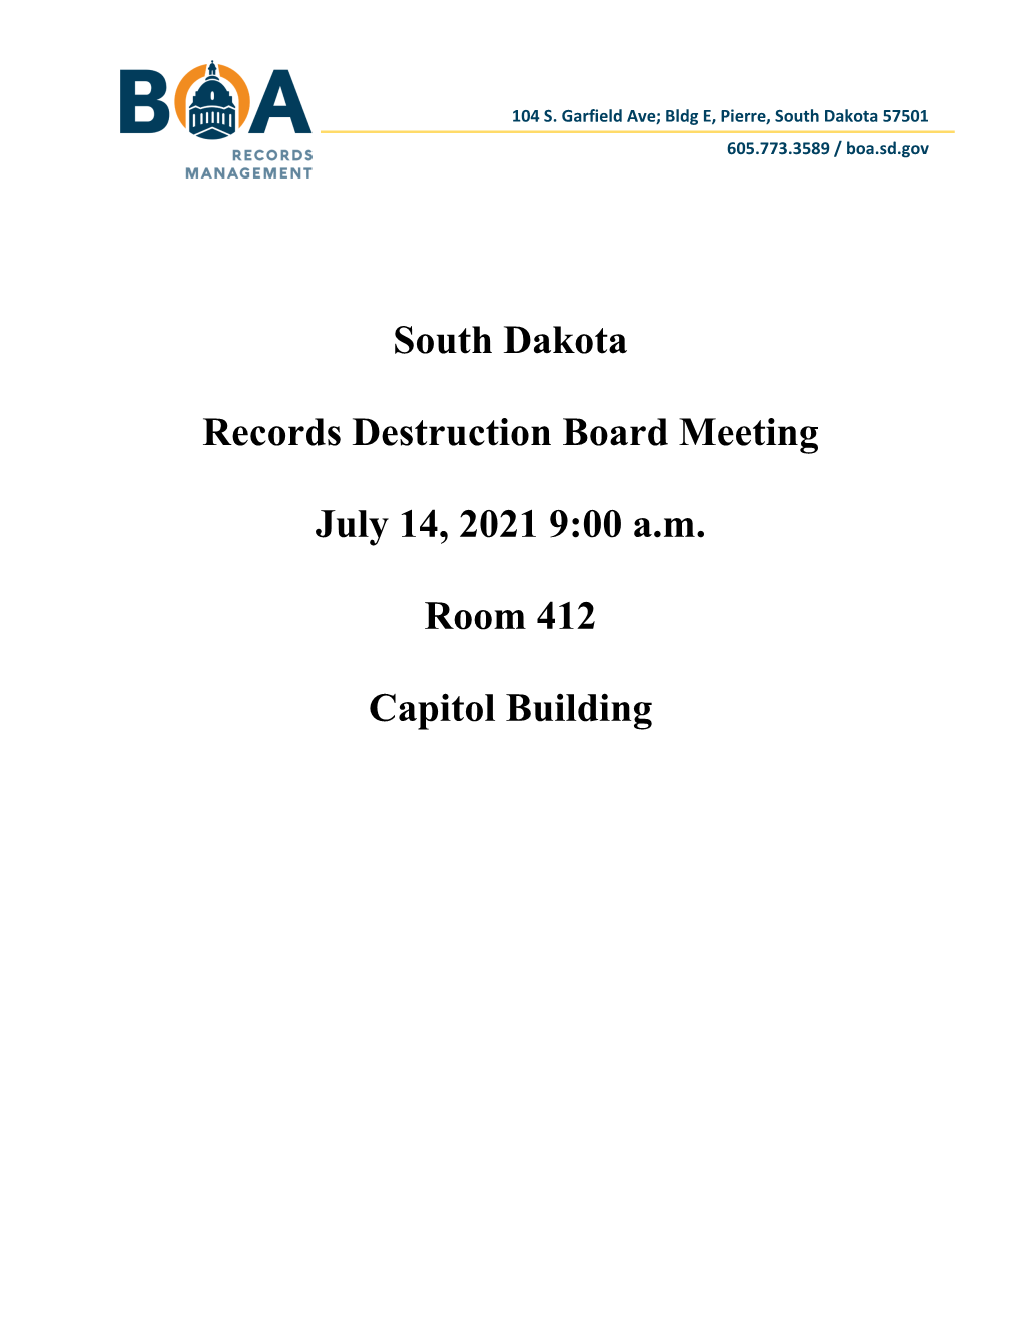 South Dakota Records Destruction Board Meeting July 14, 2021 9:00 A.M. Room 412 Capitol Building